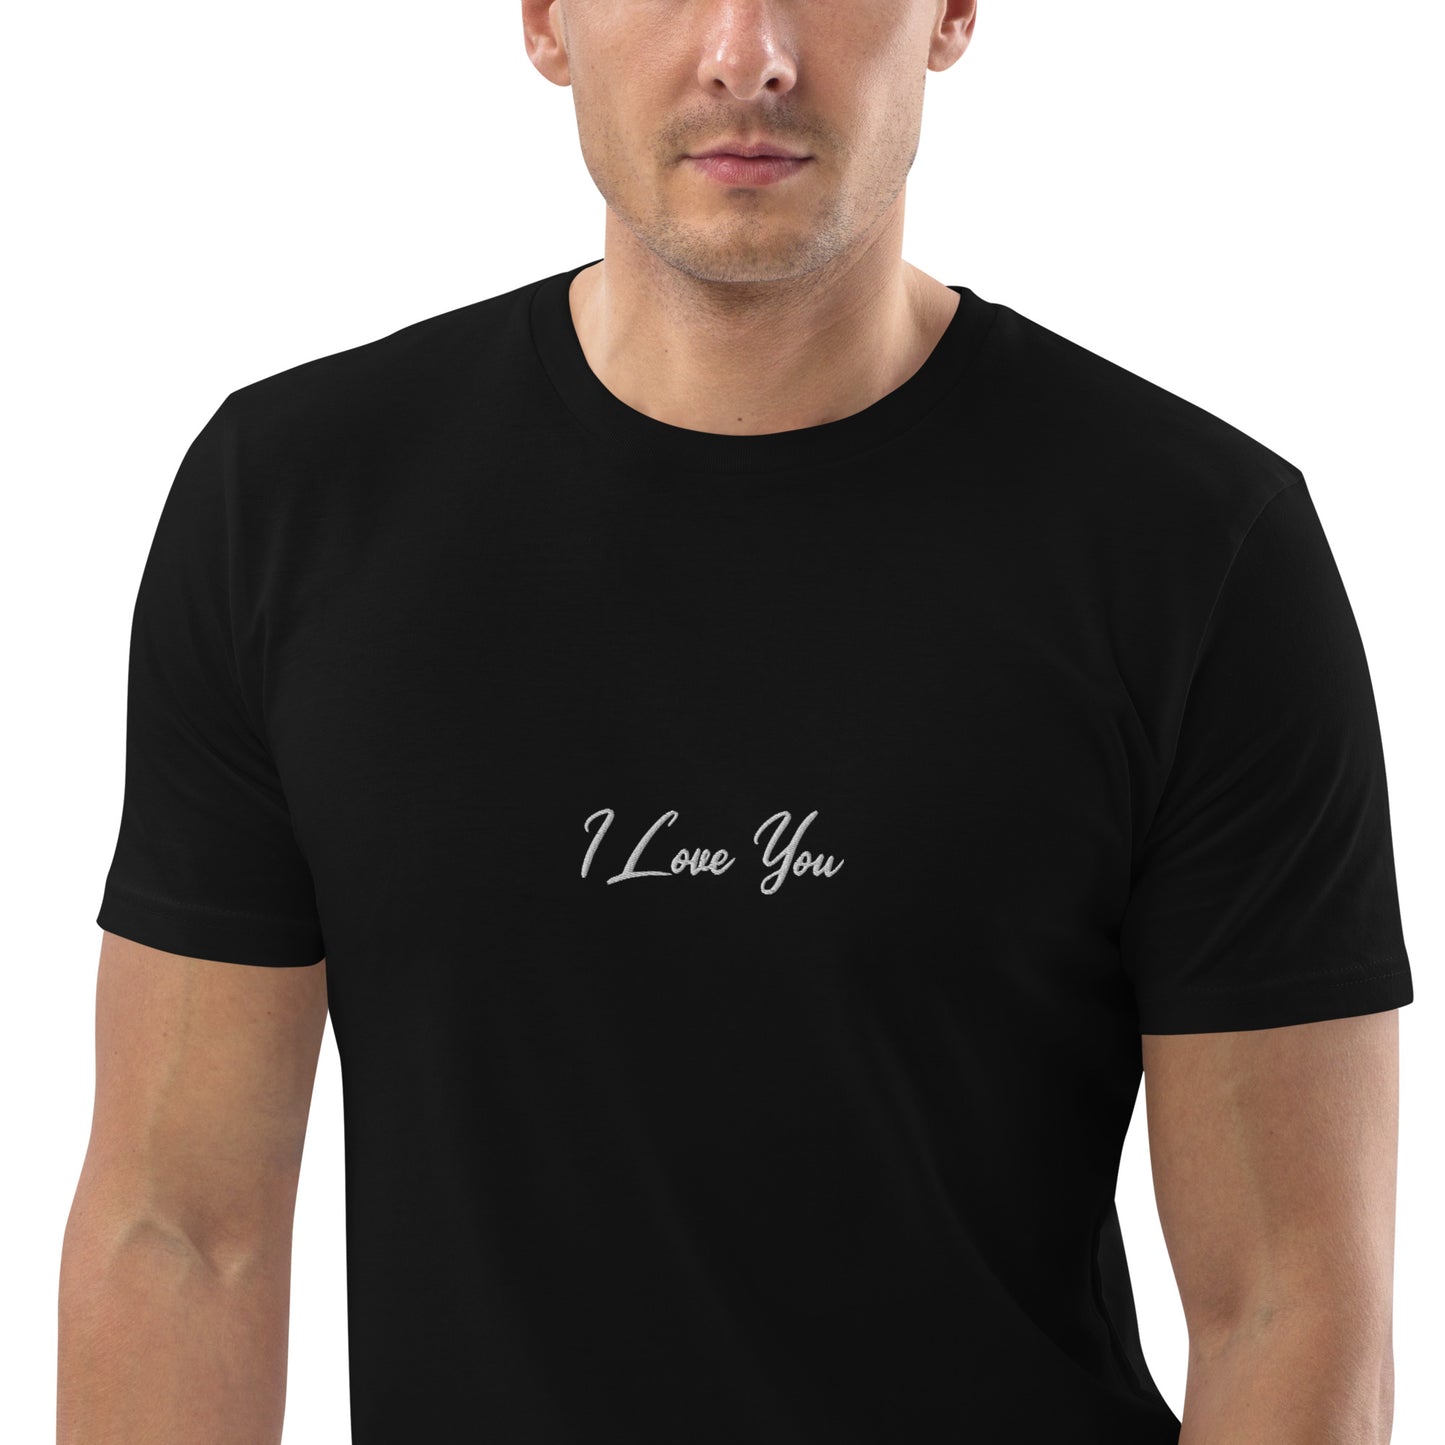 "I Love You" organic cotton t-shirt